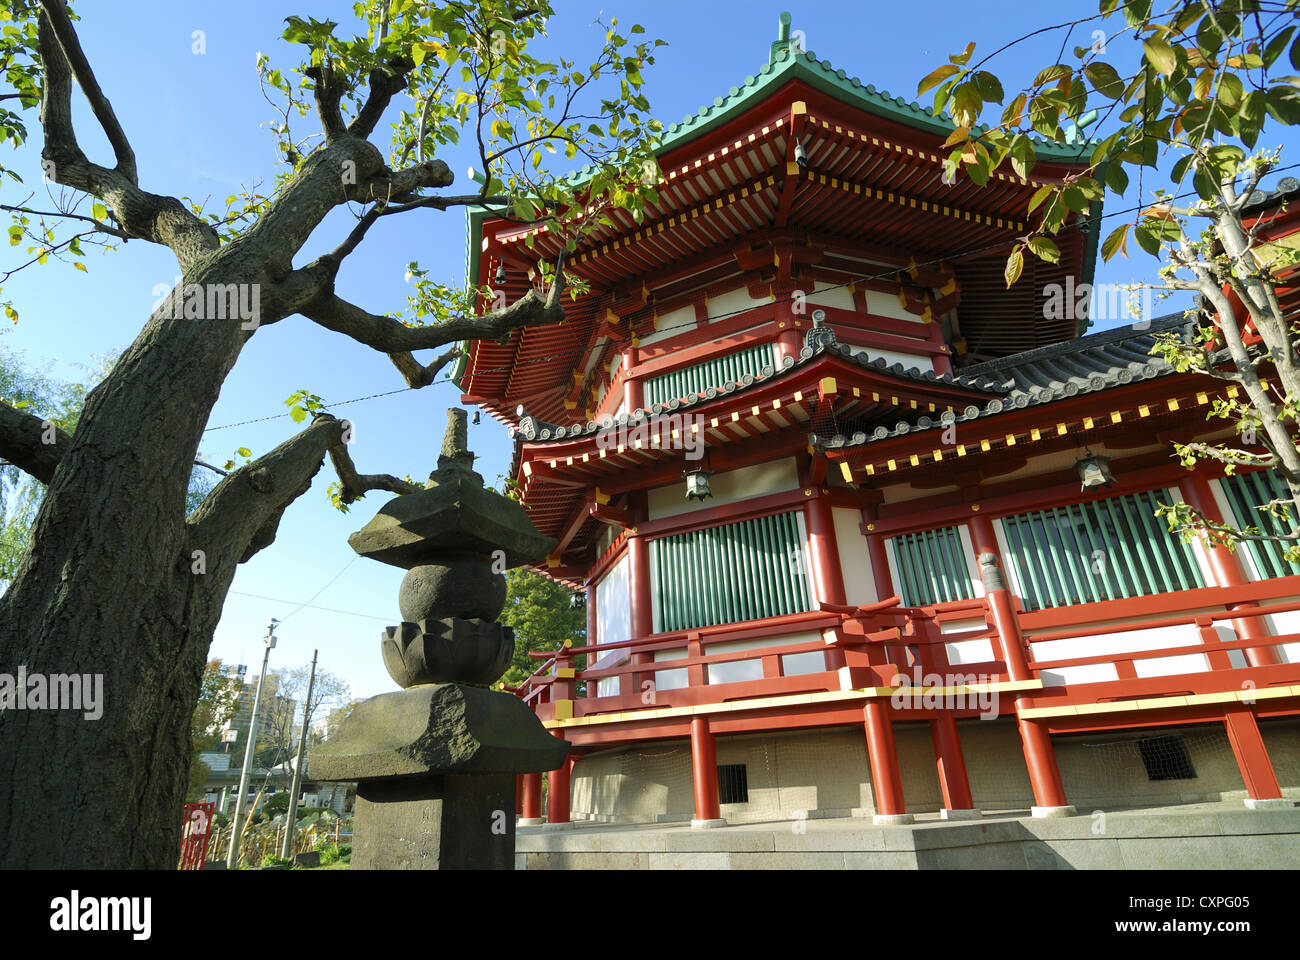 Benten Do Temple located on the island of Shinobazu pond in Famous Ueno park area, Tokyo Japan Stock Photo